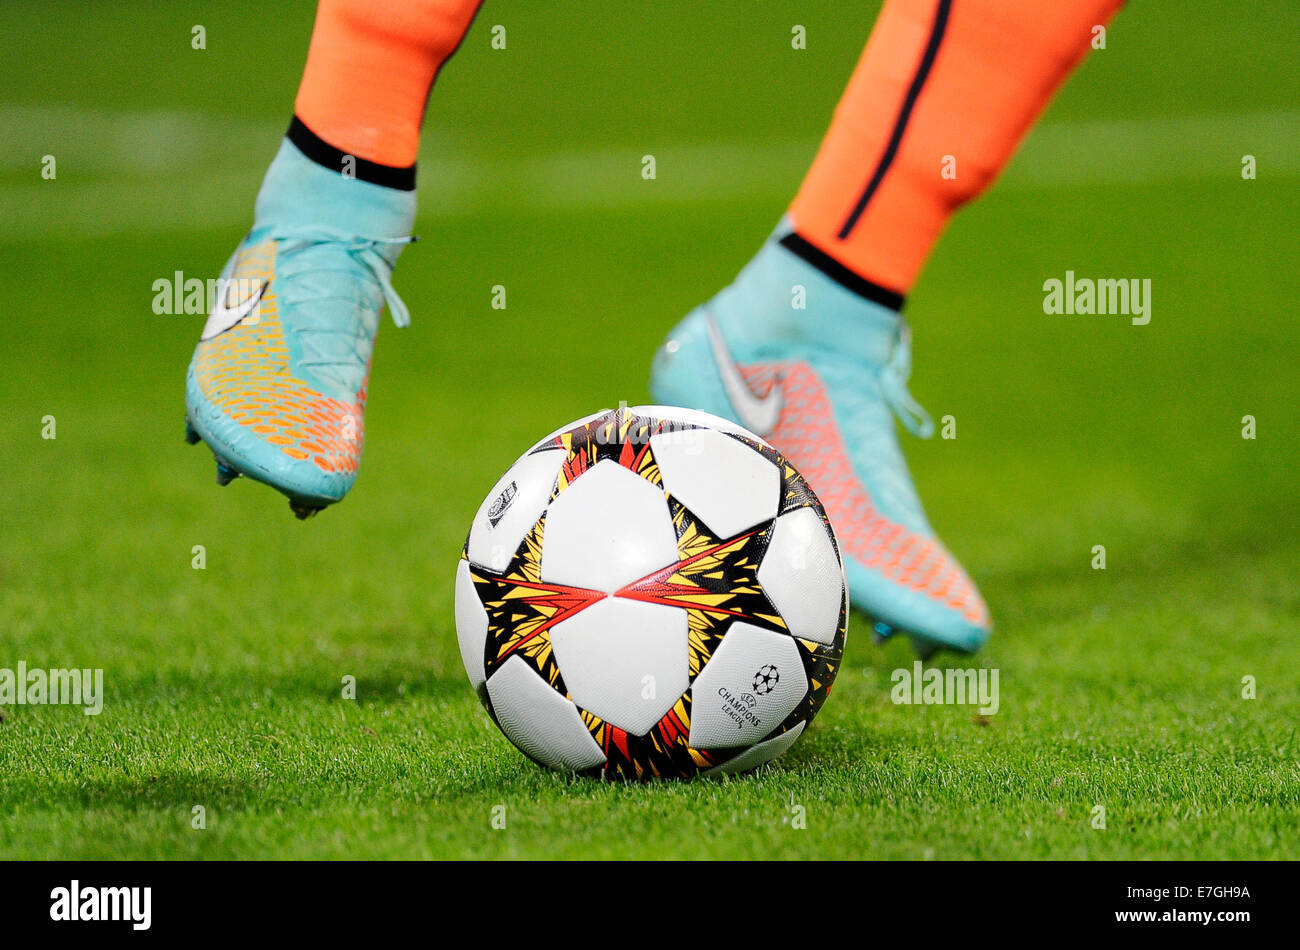 Adidas champions league ball uefa hi-res stock photography and